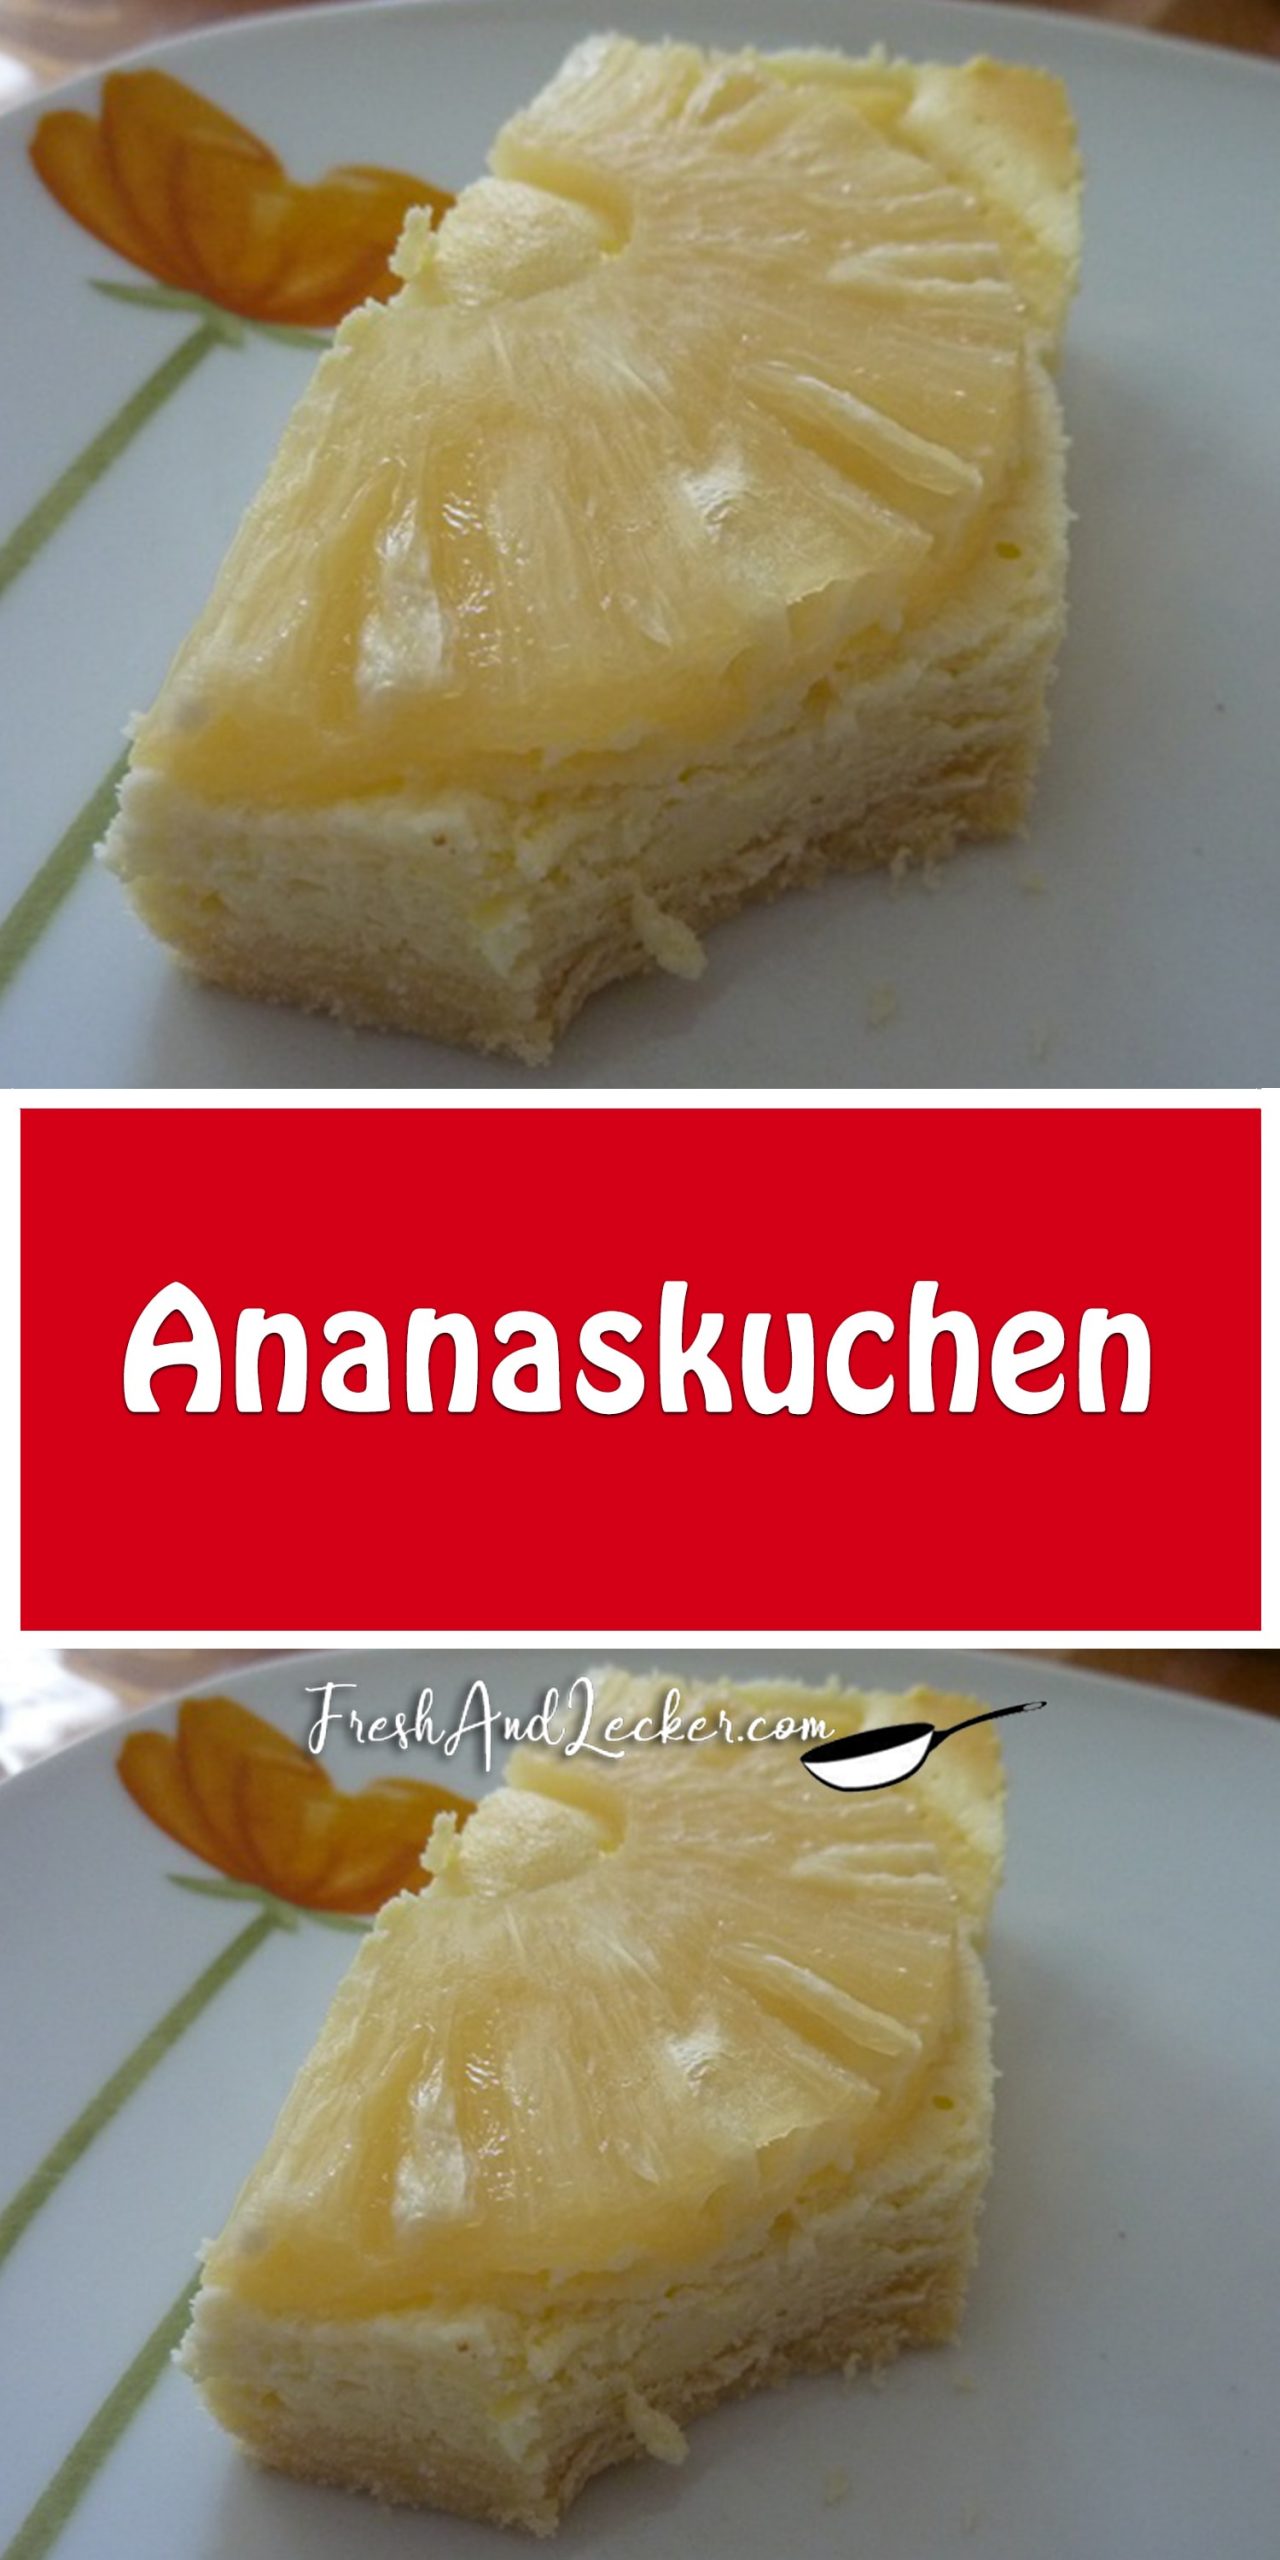 Ananaskuchen - Fresh Lecker